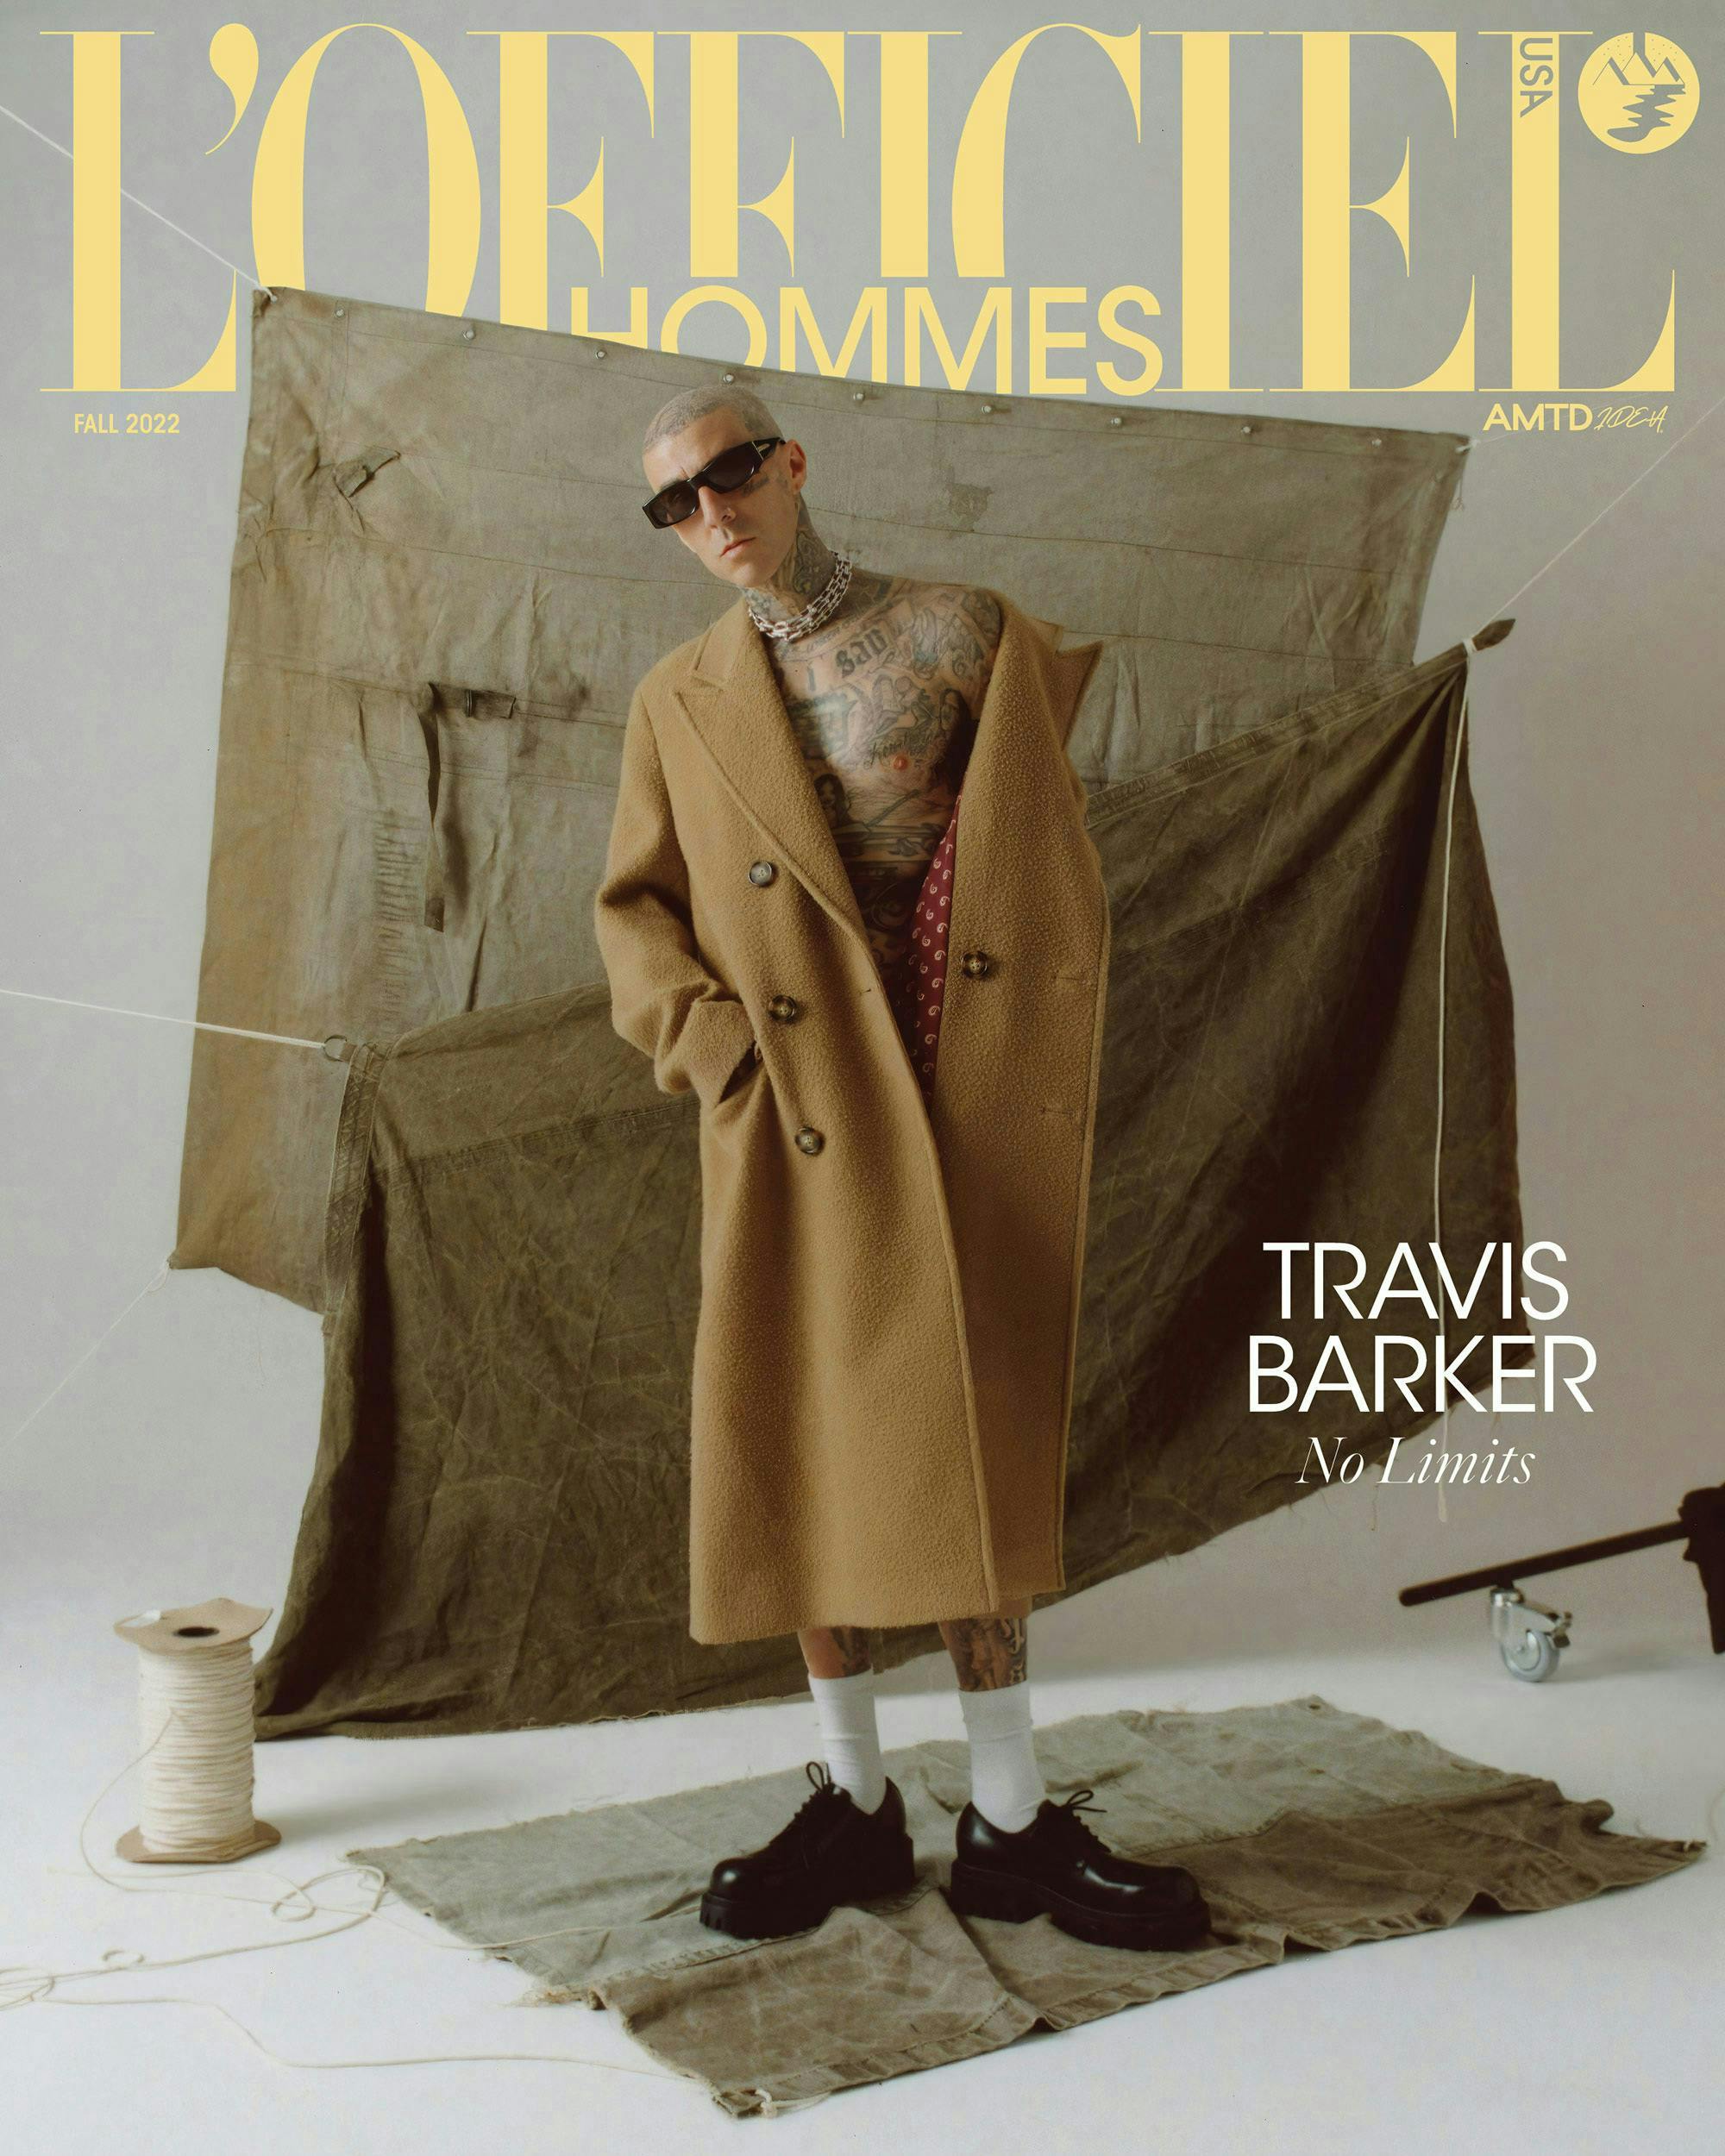 Travis barker tan coat brown blankets gray background